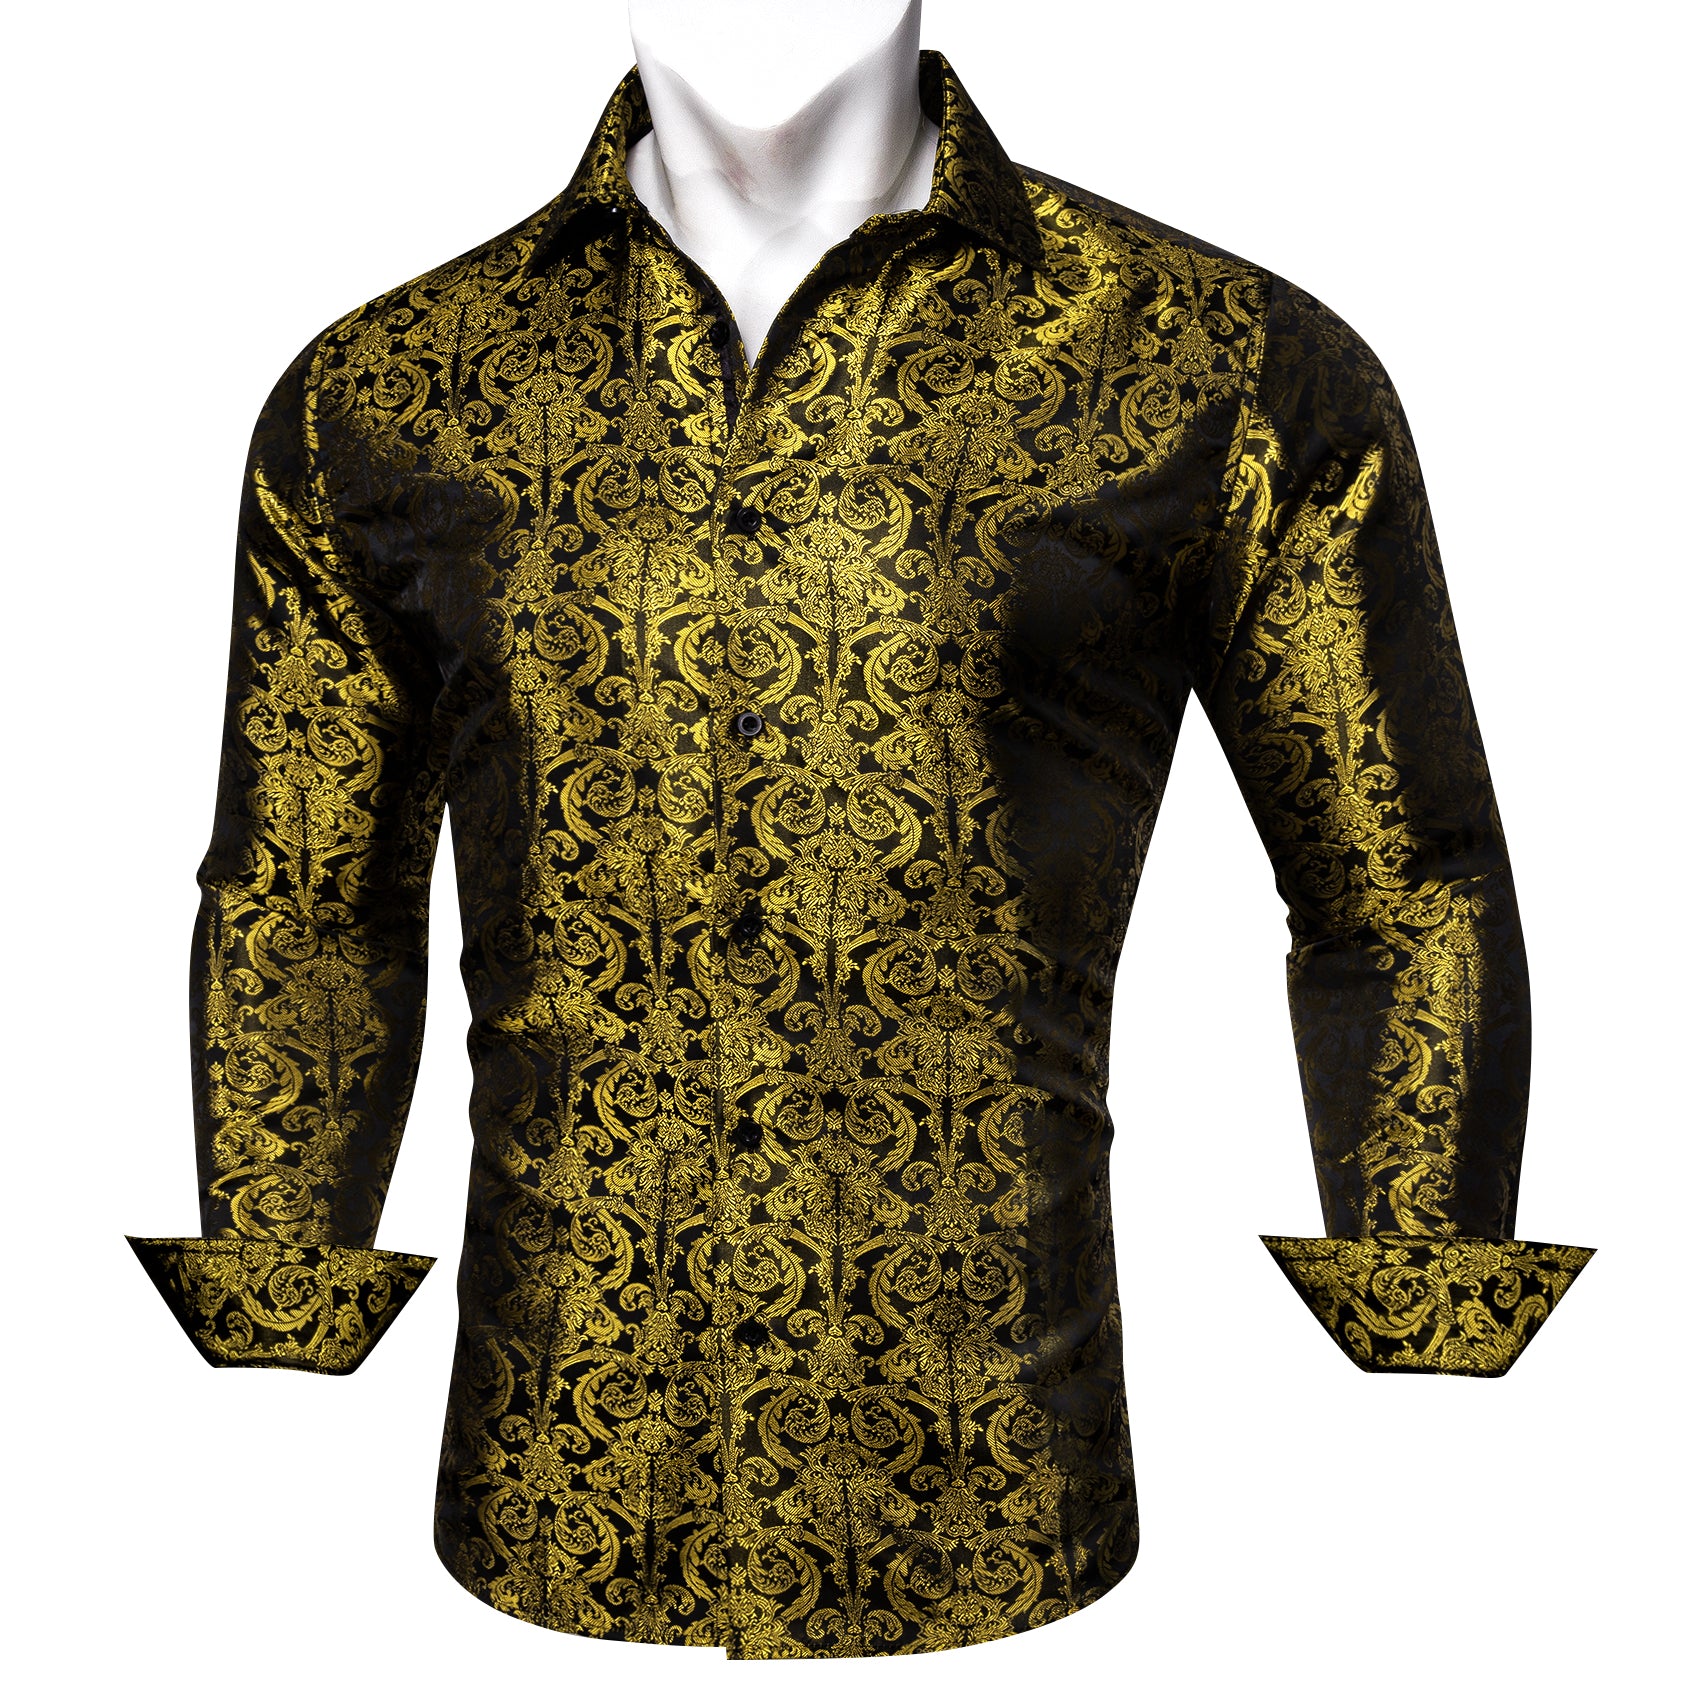 Barry.wang Long Sleeve Shirt Luxury Olive Green Paisley Silk Shirt